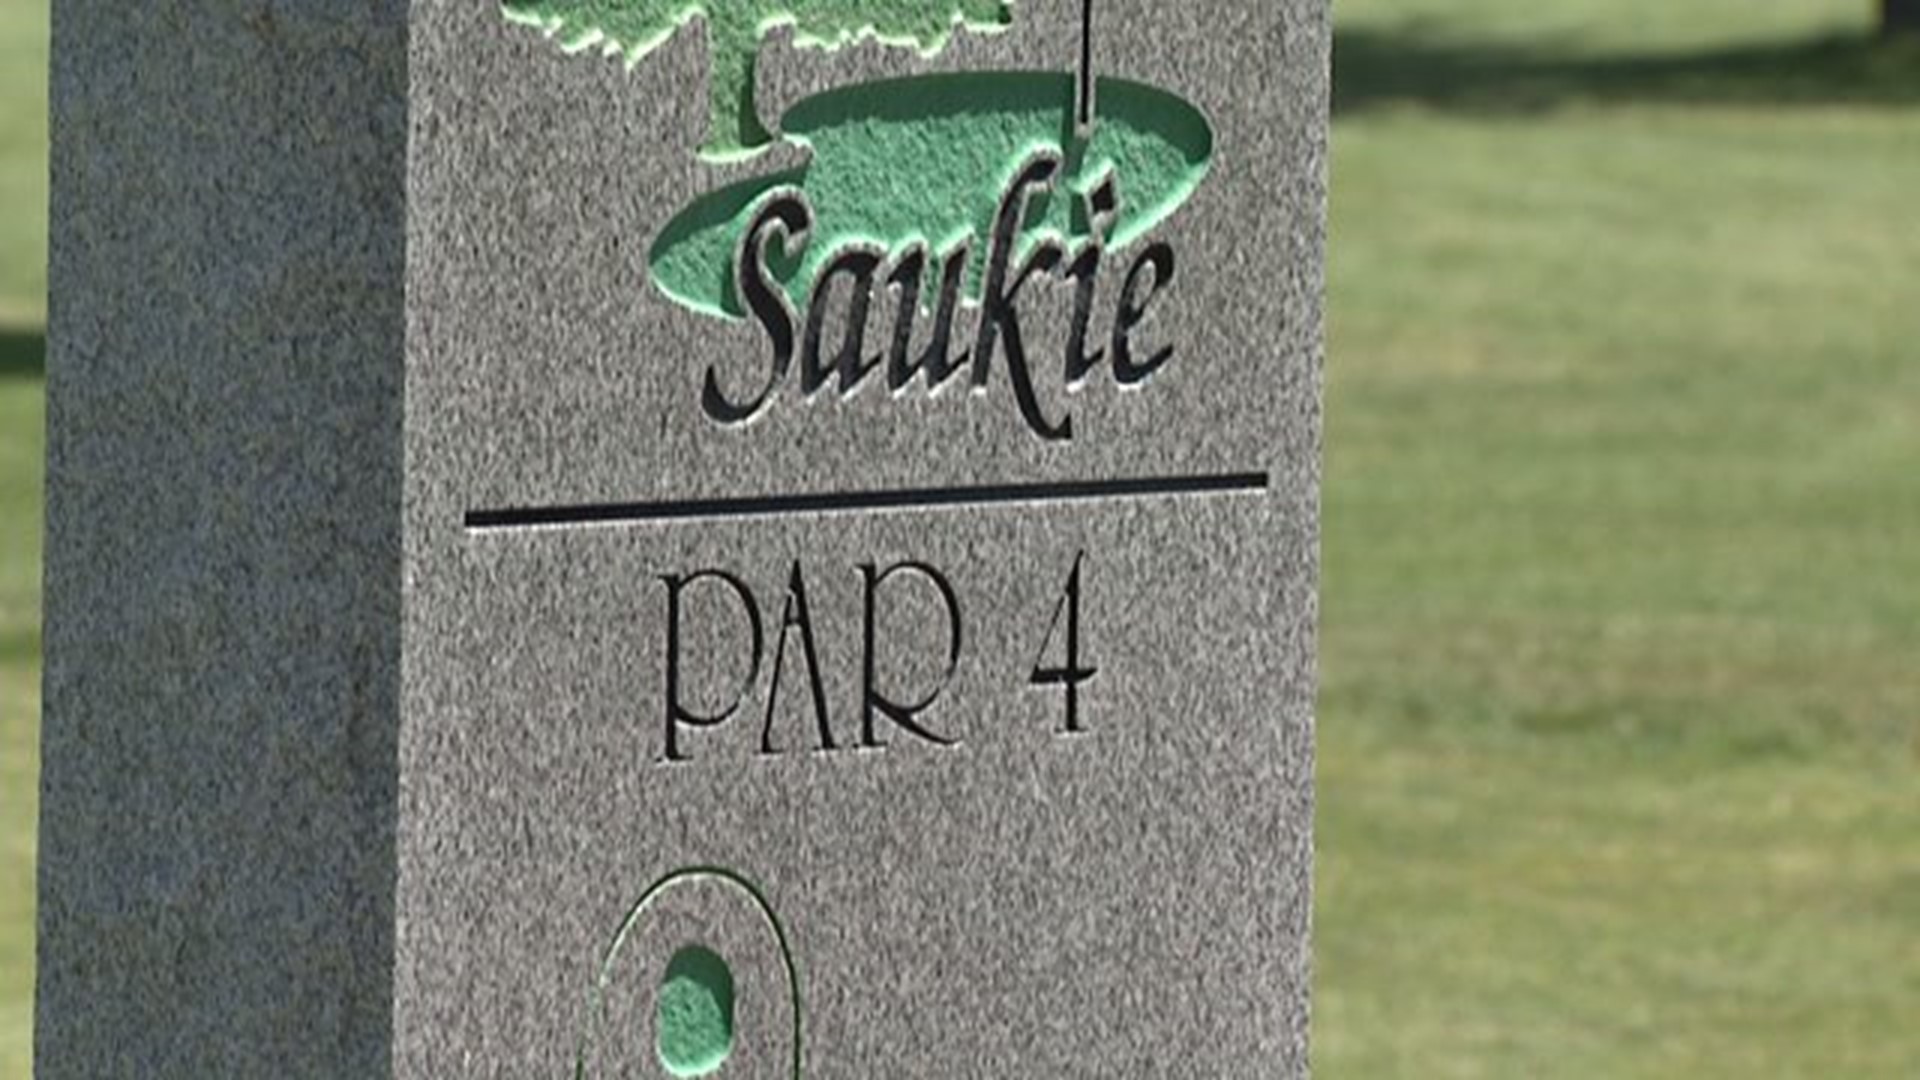 Saukie Golf Course